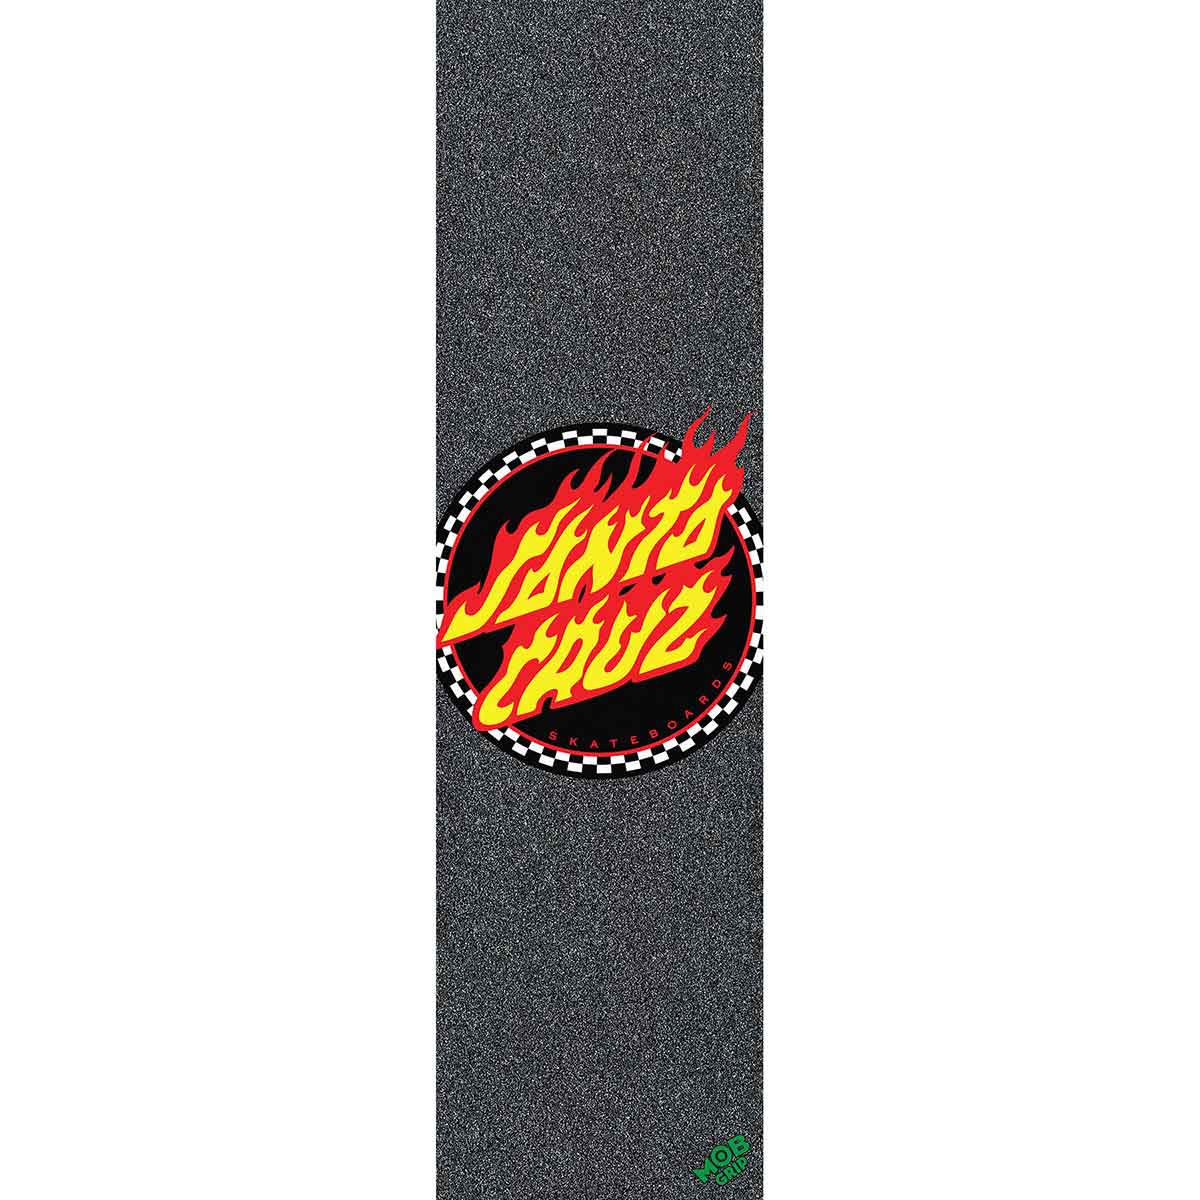 Christian tegenkomen replica Mob Santa Cruz Check Ringed Flamed Dot Graphic Skateboard Griptape - Black  9x33 | SoCal Skateshop